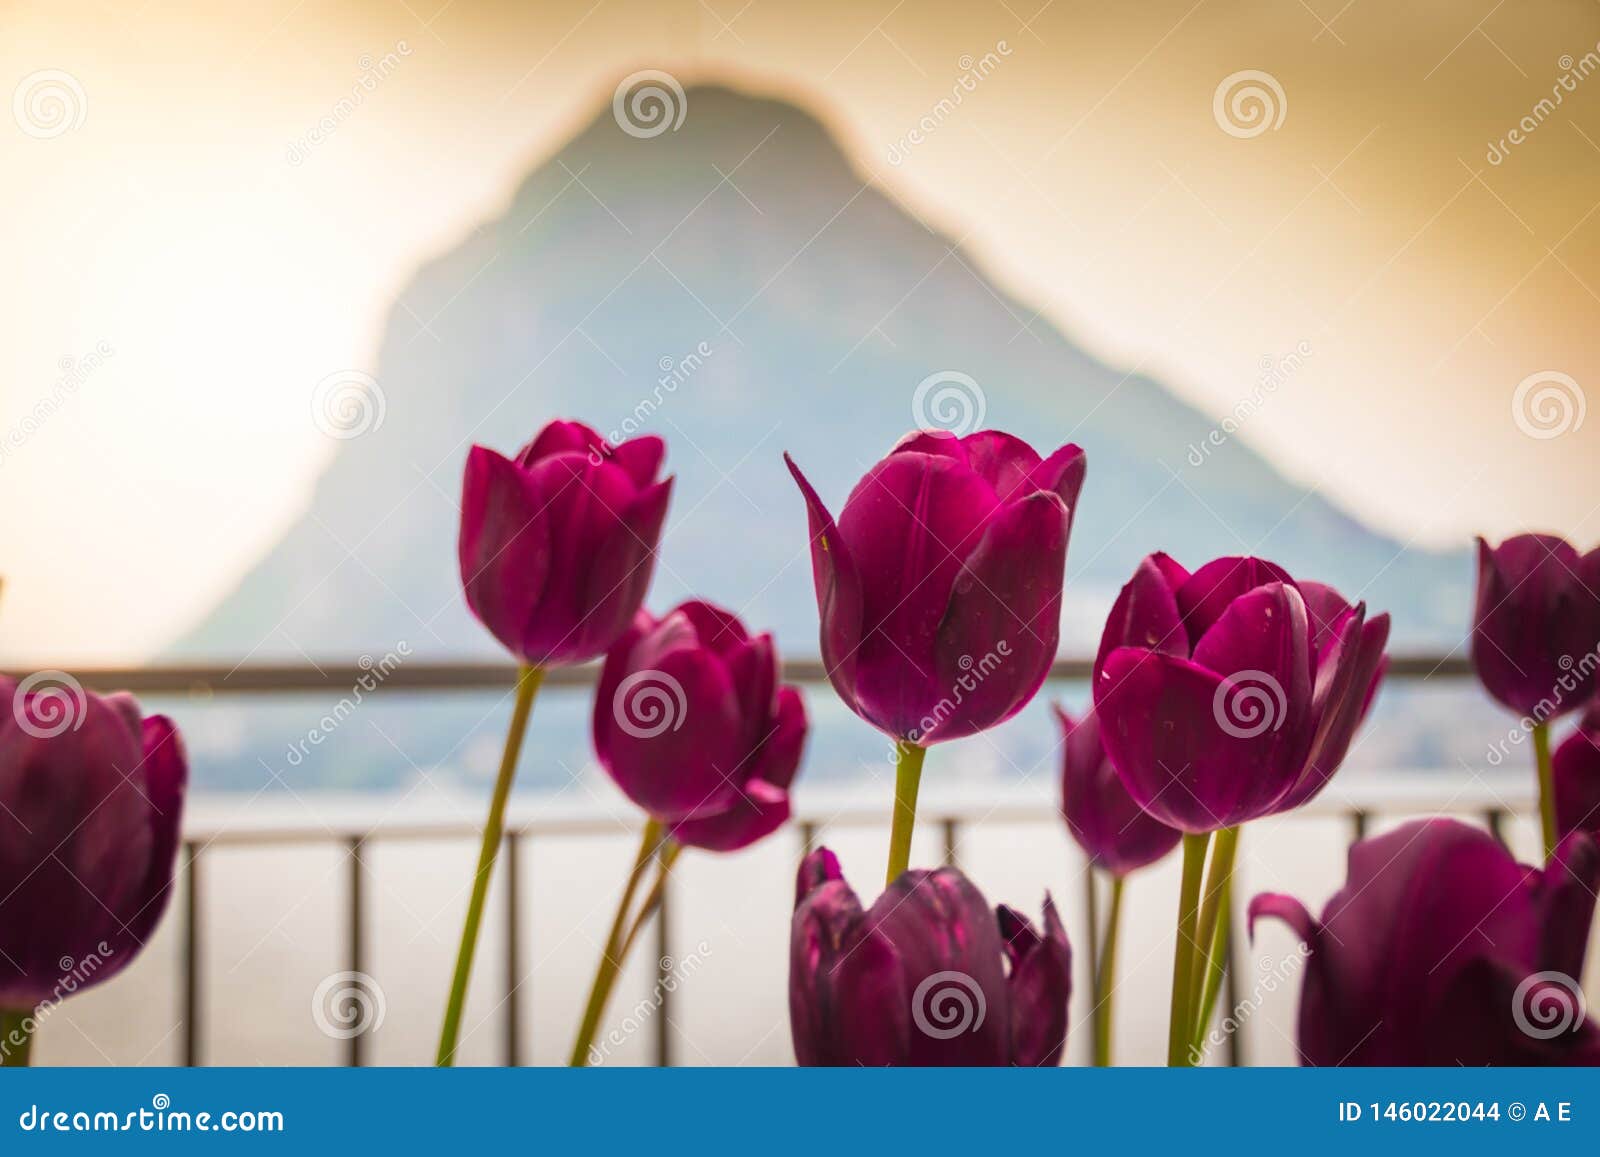 colors of luganoÃÂ´s tulip